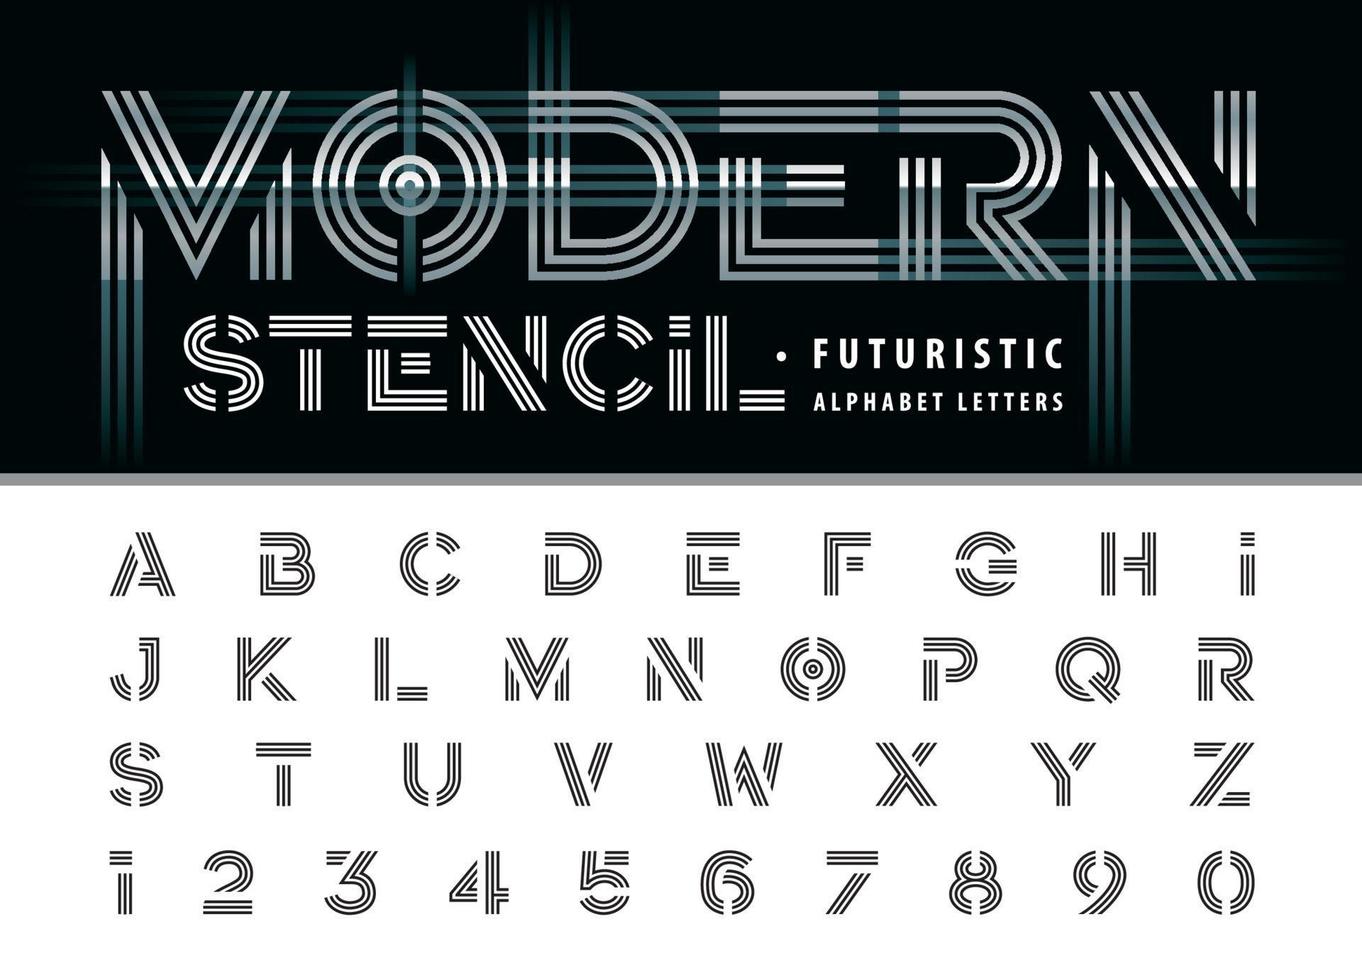 drie regels moderne Alfabetletters en cijfers, minimale vetgedrukte letters lettertype ingesteld voor technologie, mode, futuristisch. vector